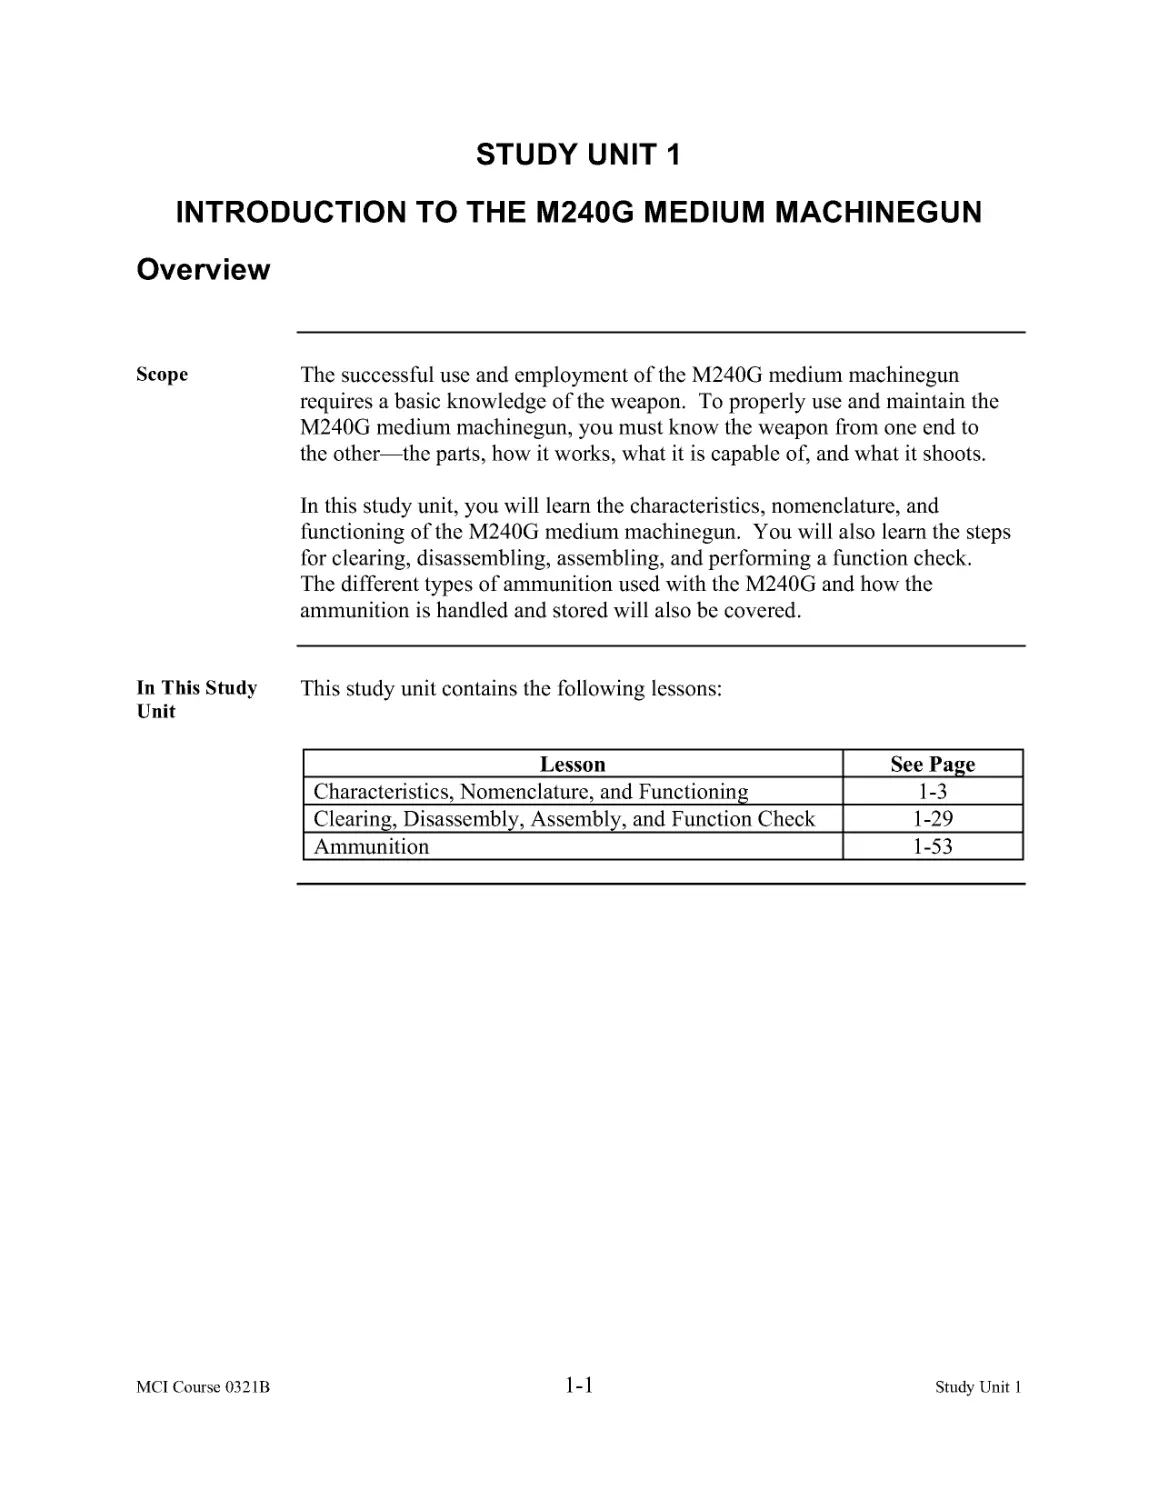 Study Unit 1:  Introduction to the M240G Medium Machinegun